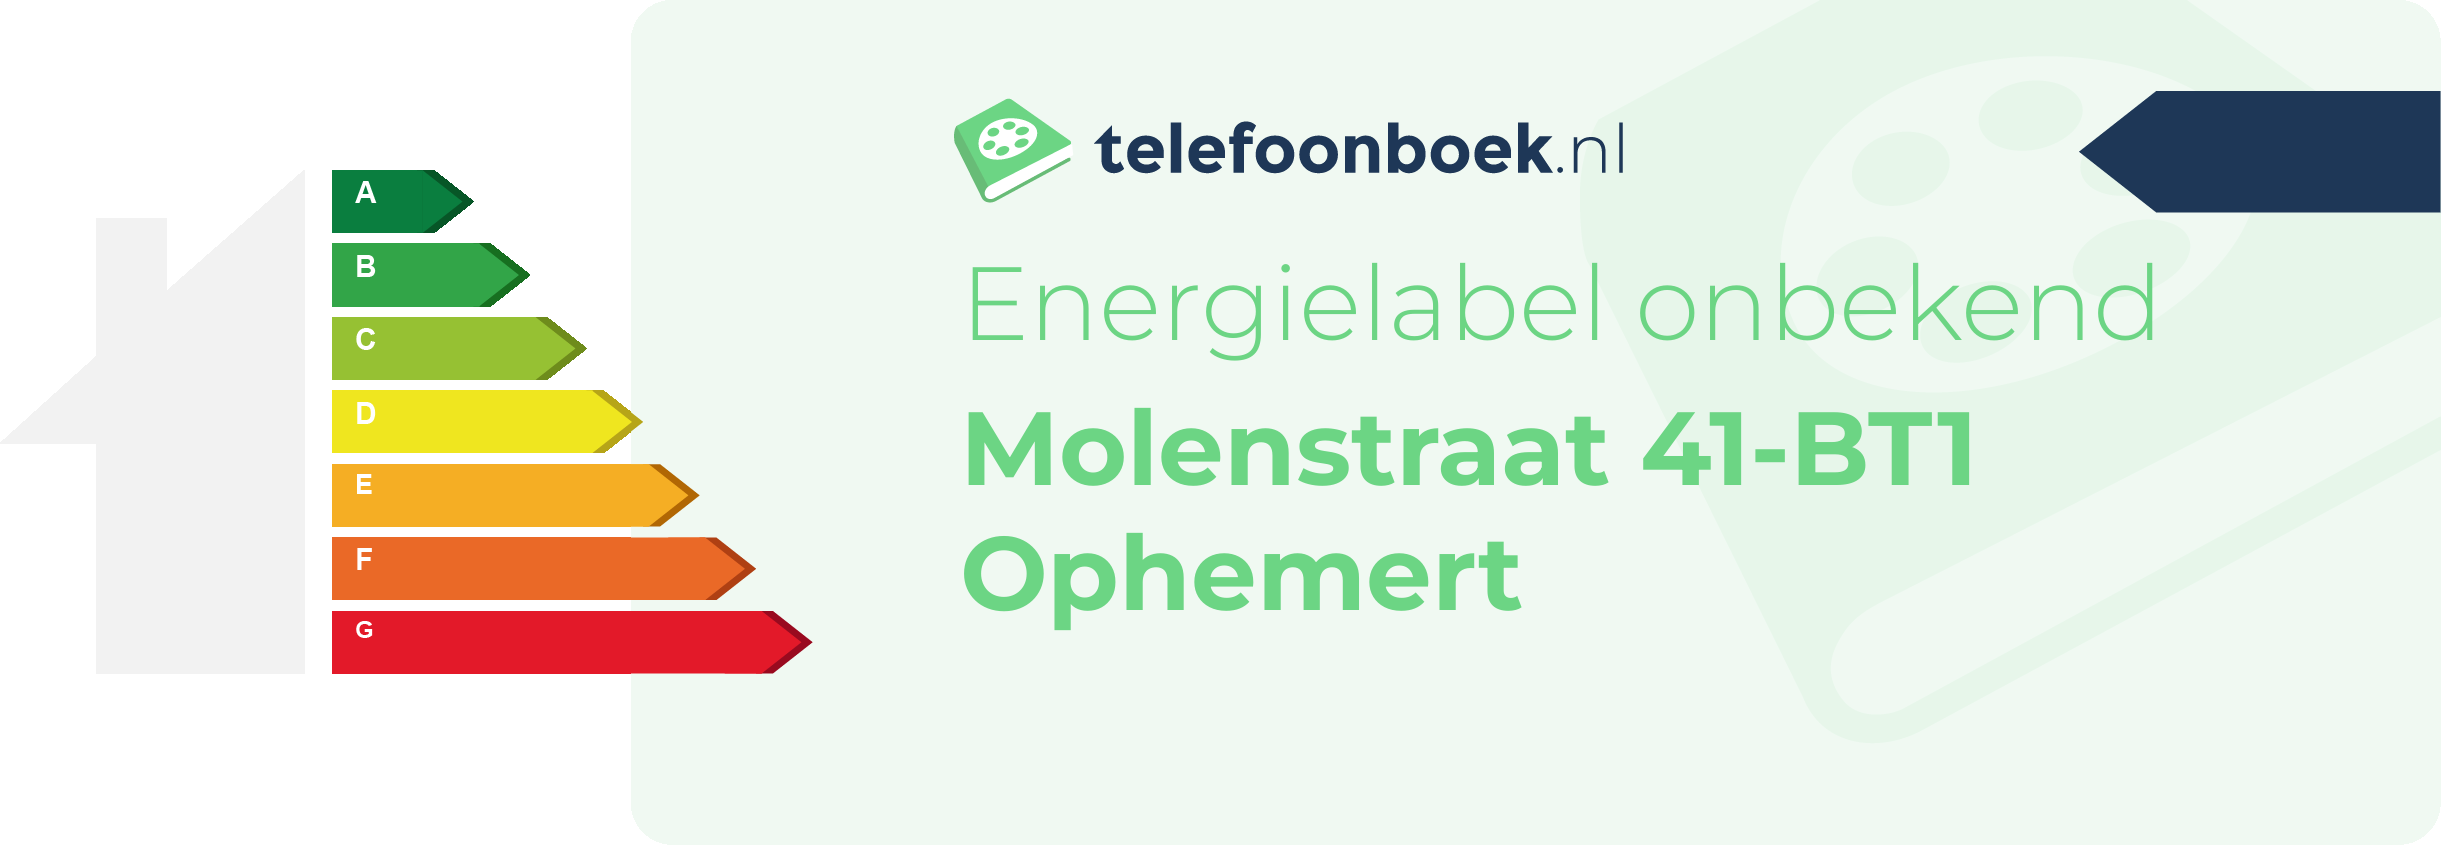 Energielabel Molenstraat 41-BT1 Ophemert